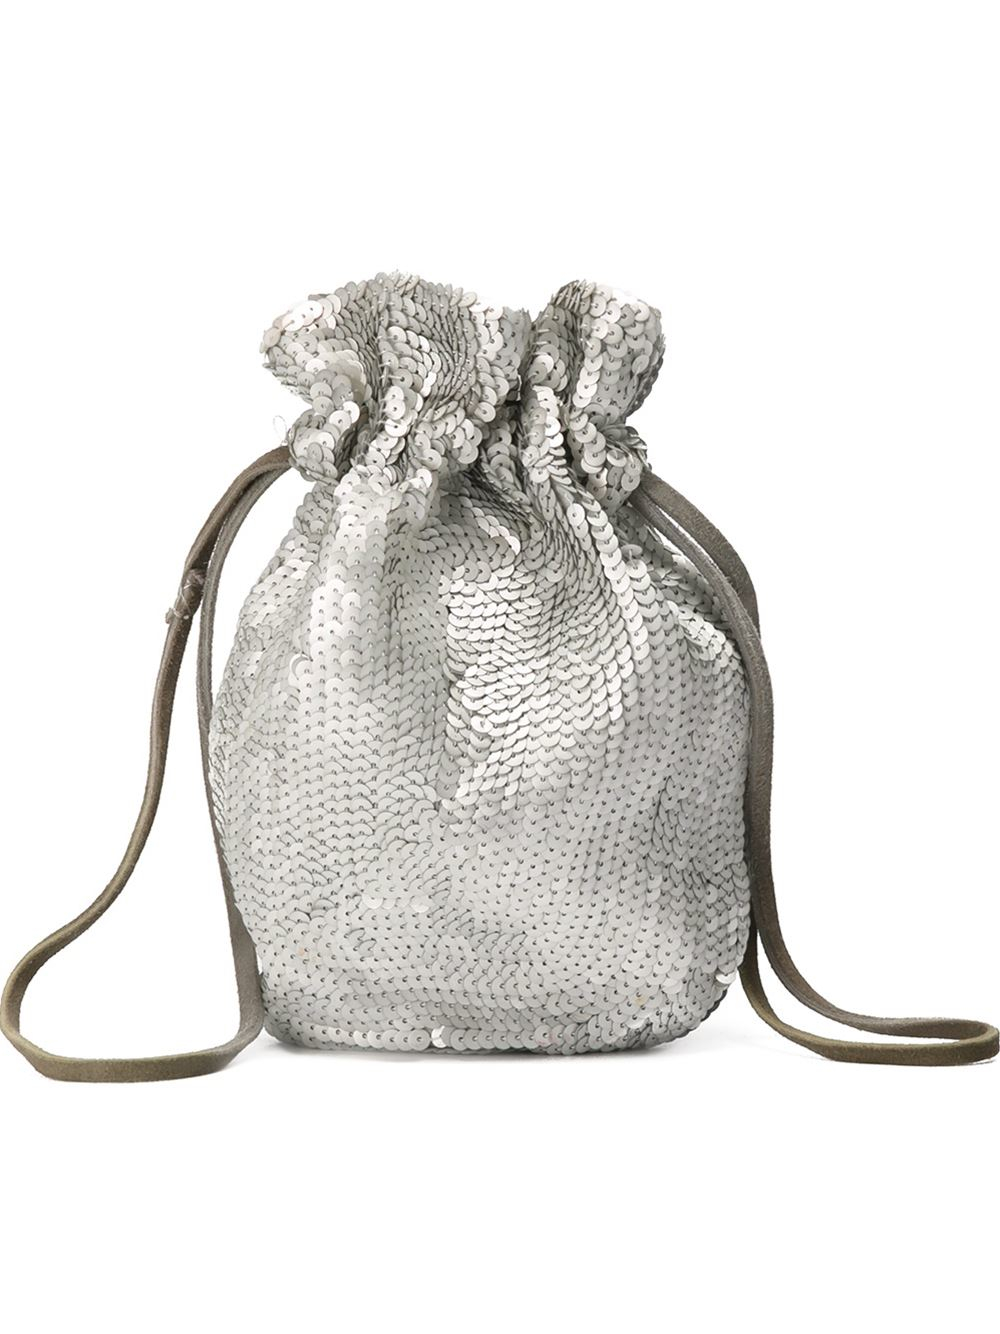 Prada Sequin Drawstring Bag in Grey (Metallic) - Lyst